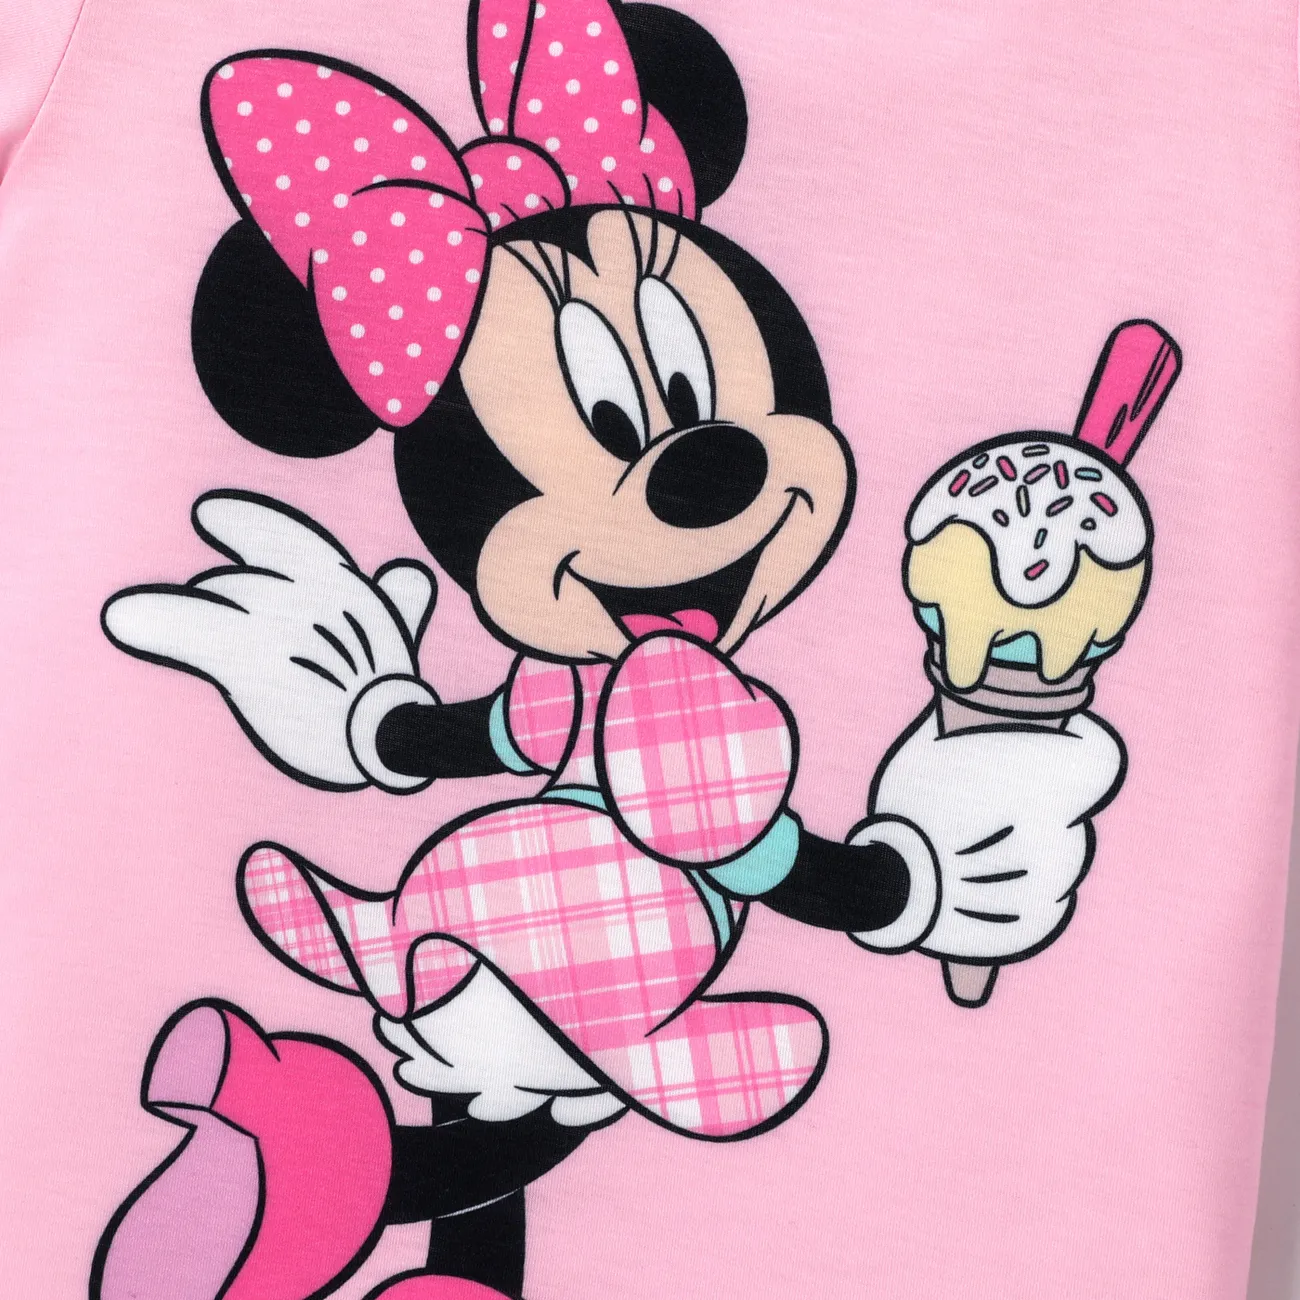 Disney Mickey and Friends Pâques Fille Manches à volants Doux T-Shirt Rose big image 1